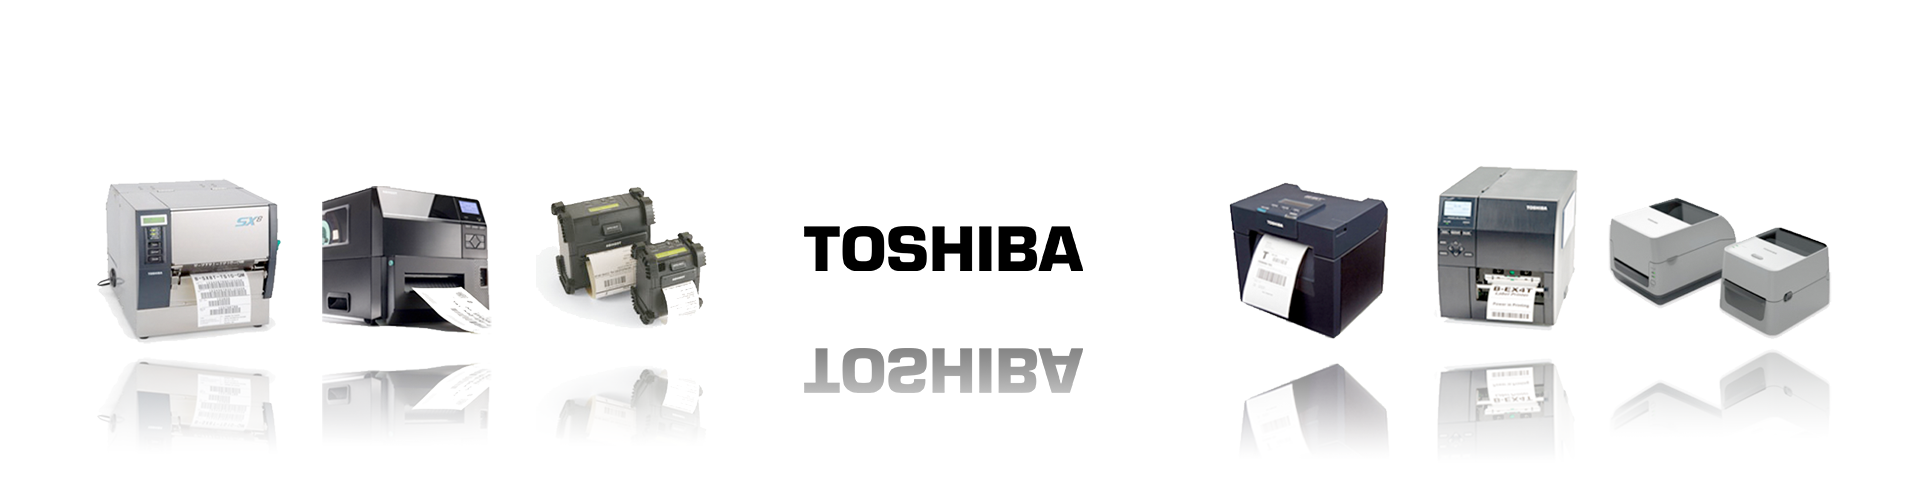 Toshiba banner